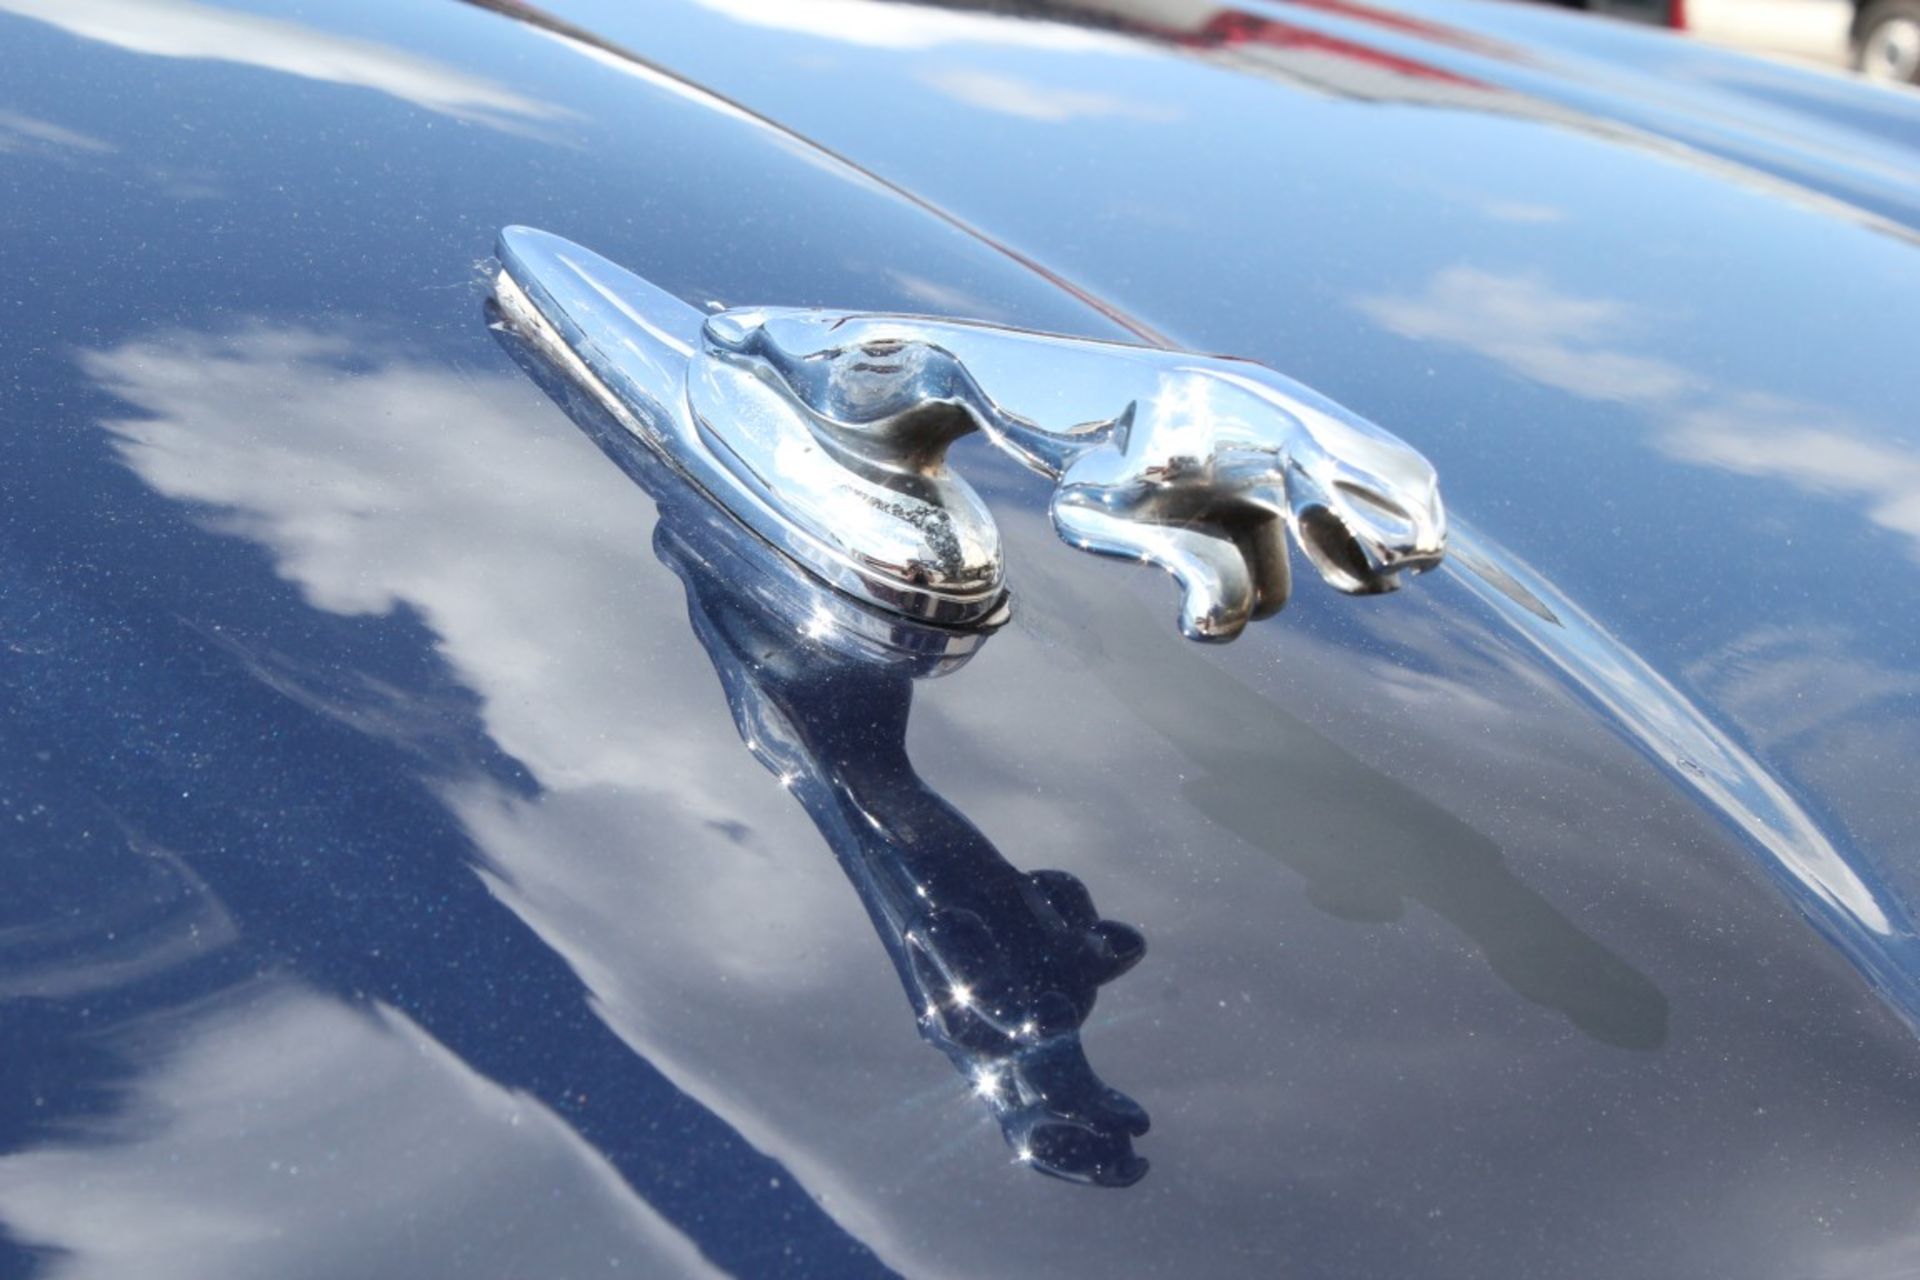 1 x Jaguar Daimler Super V8 Auto 4-Door Saloon - Year 2001 - Blue - Odometer Reading 122,520 - MOT - Image 2 of 77